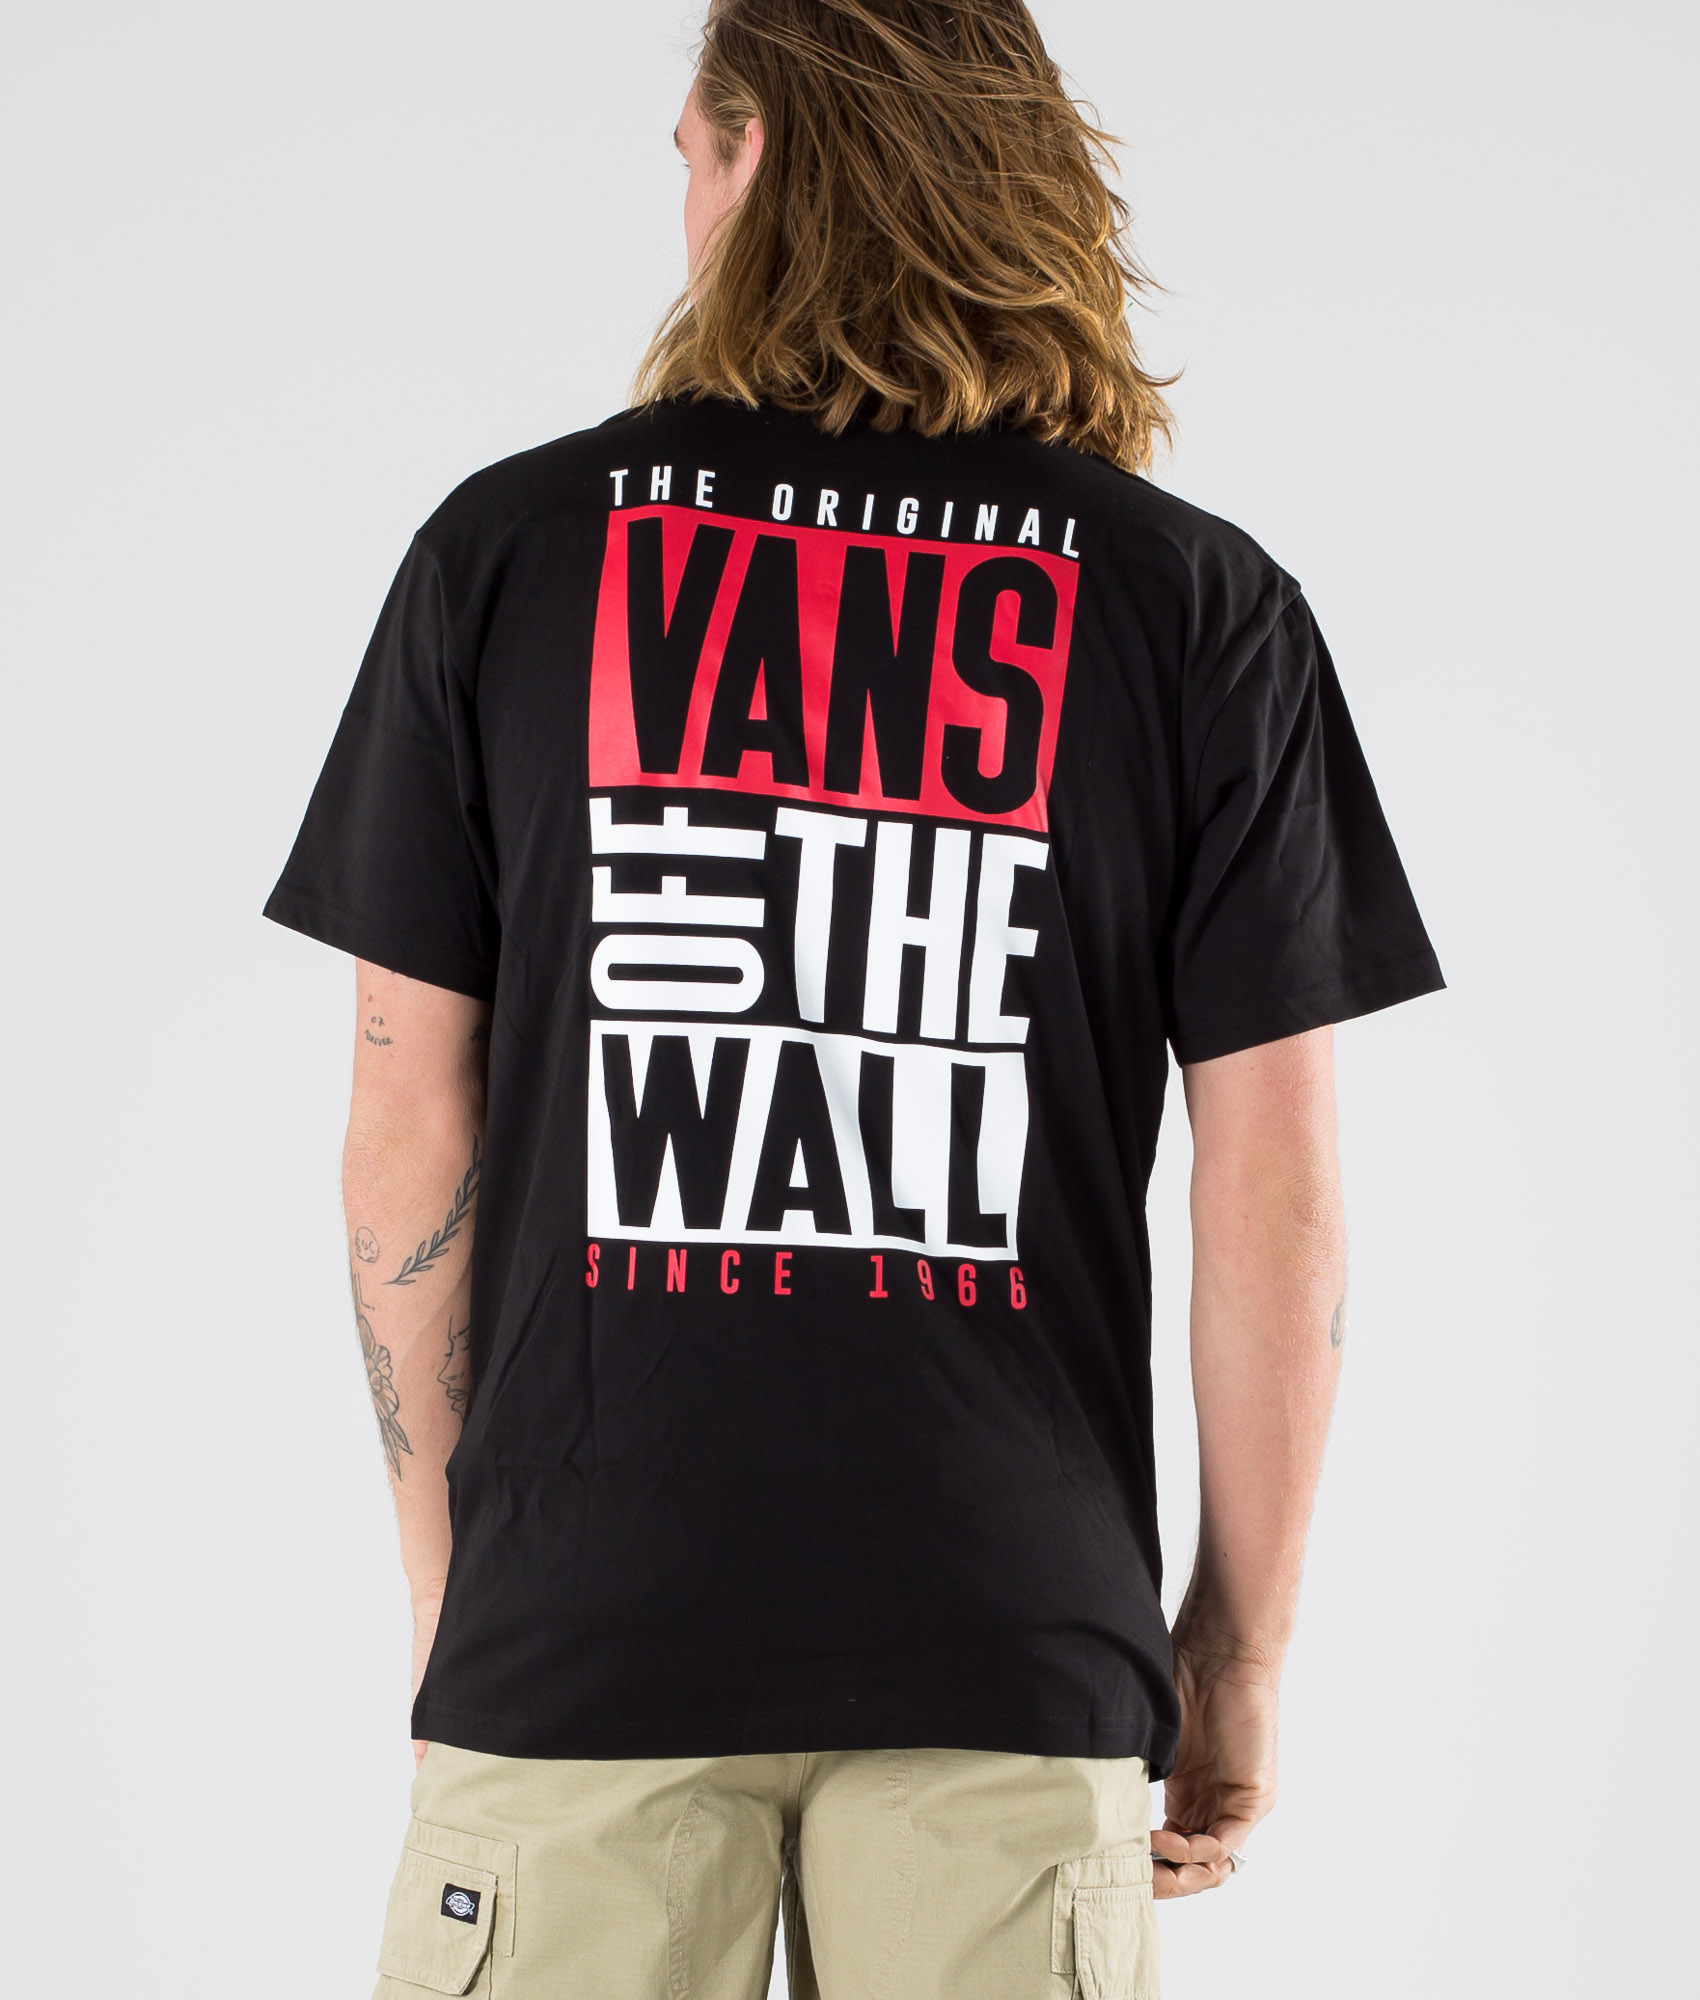 images of vans t shirts